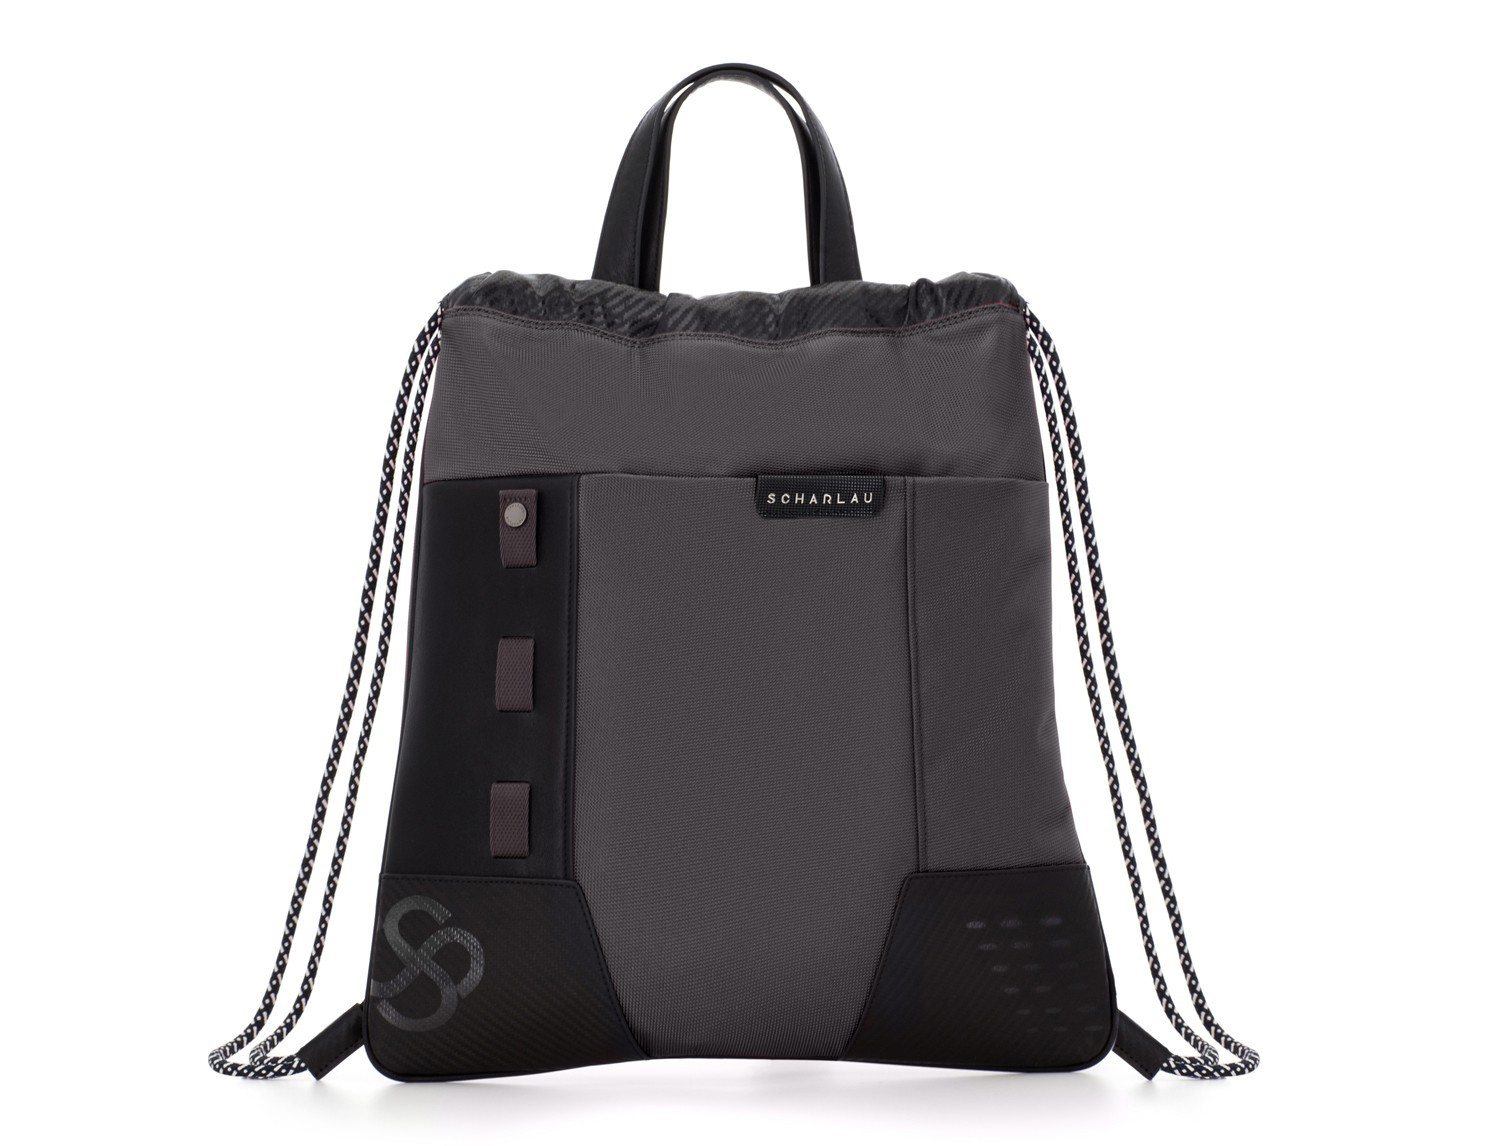 nylon backpack gray front